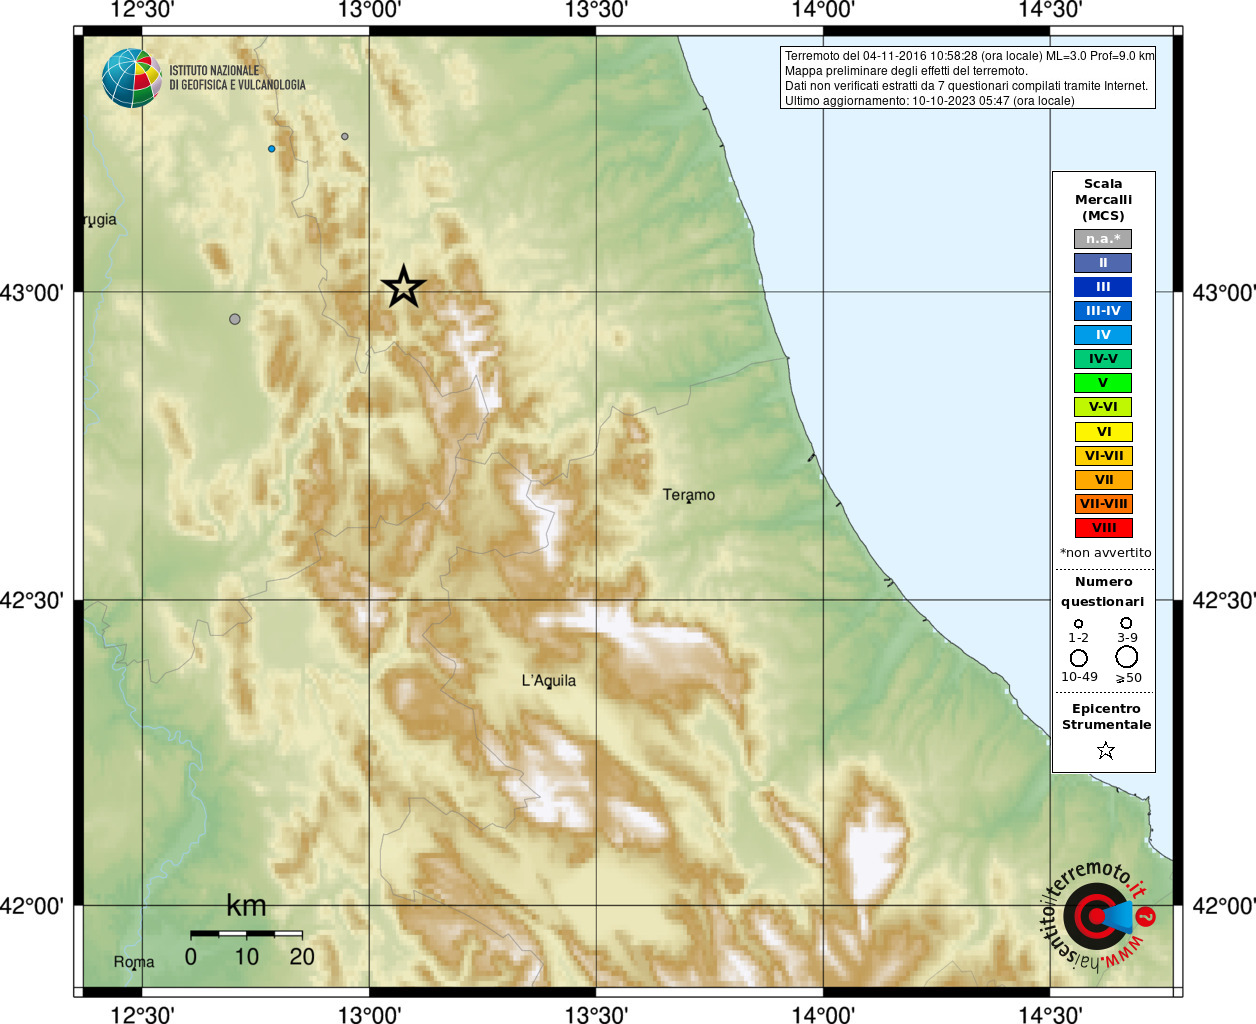 Earthquake 4 km SW Fiordimonte (MC), Magnitude ML 3.0, 4 November 2016 time 10:58:28 ...